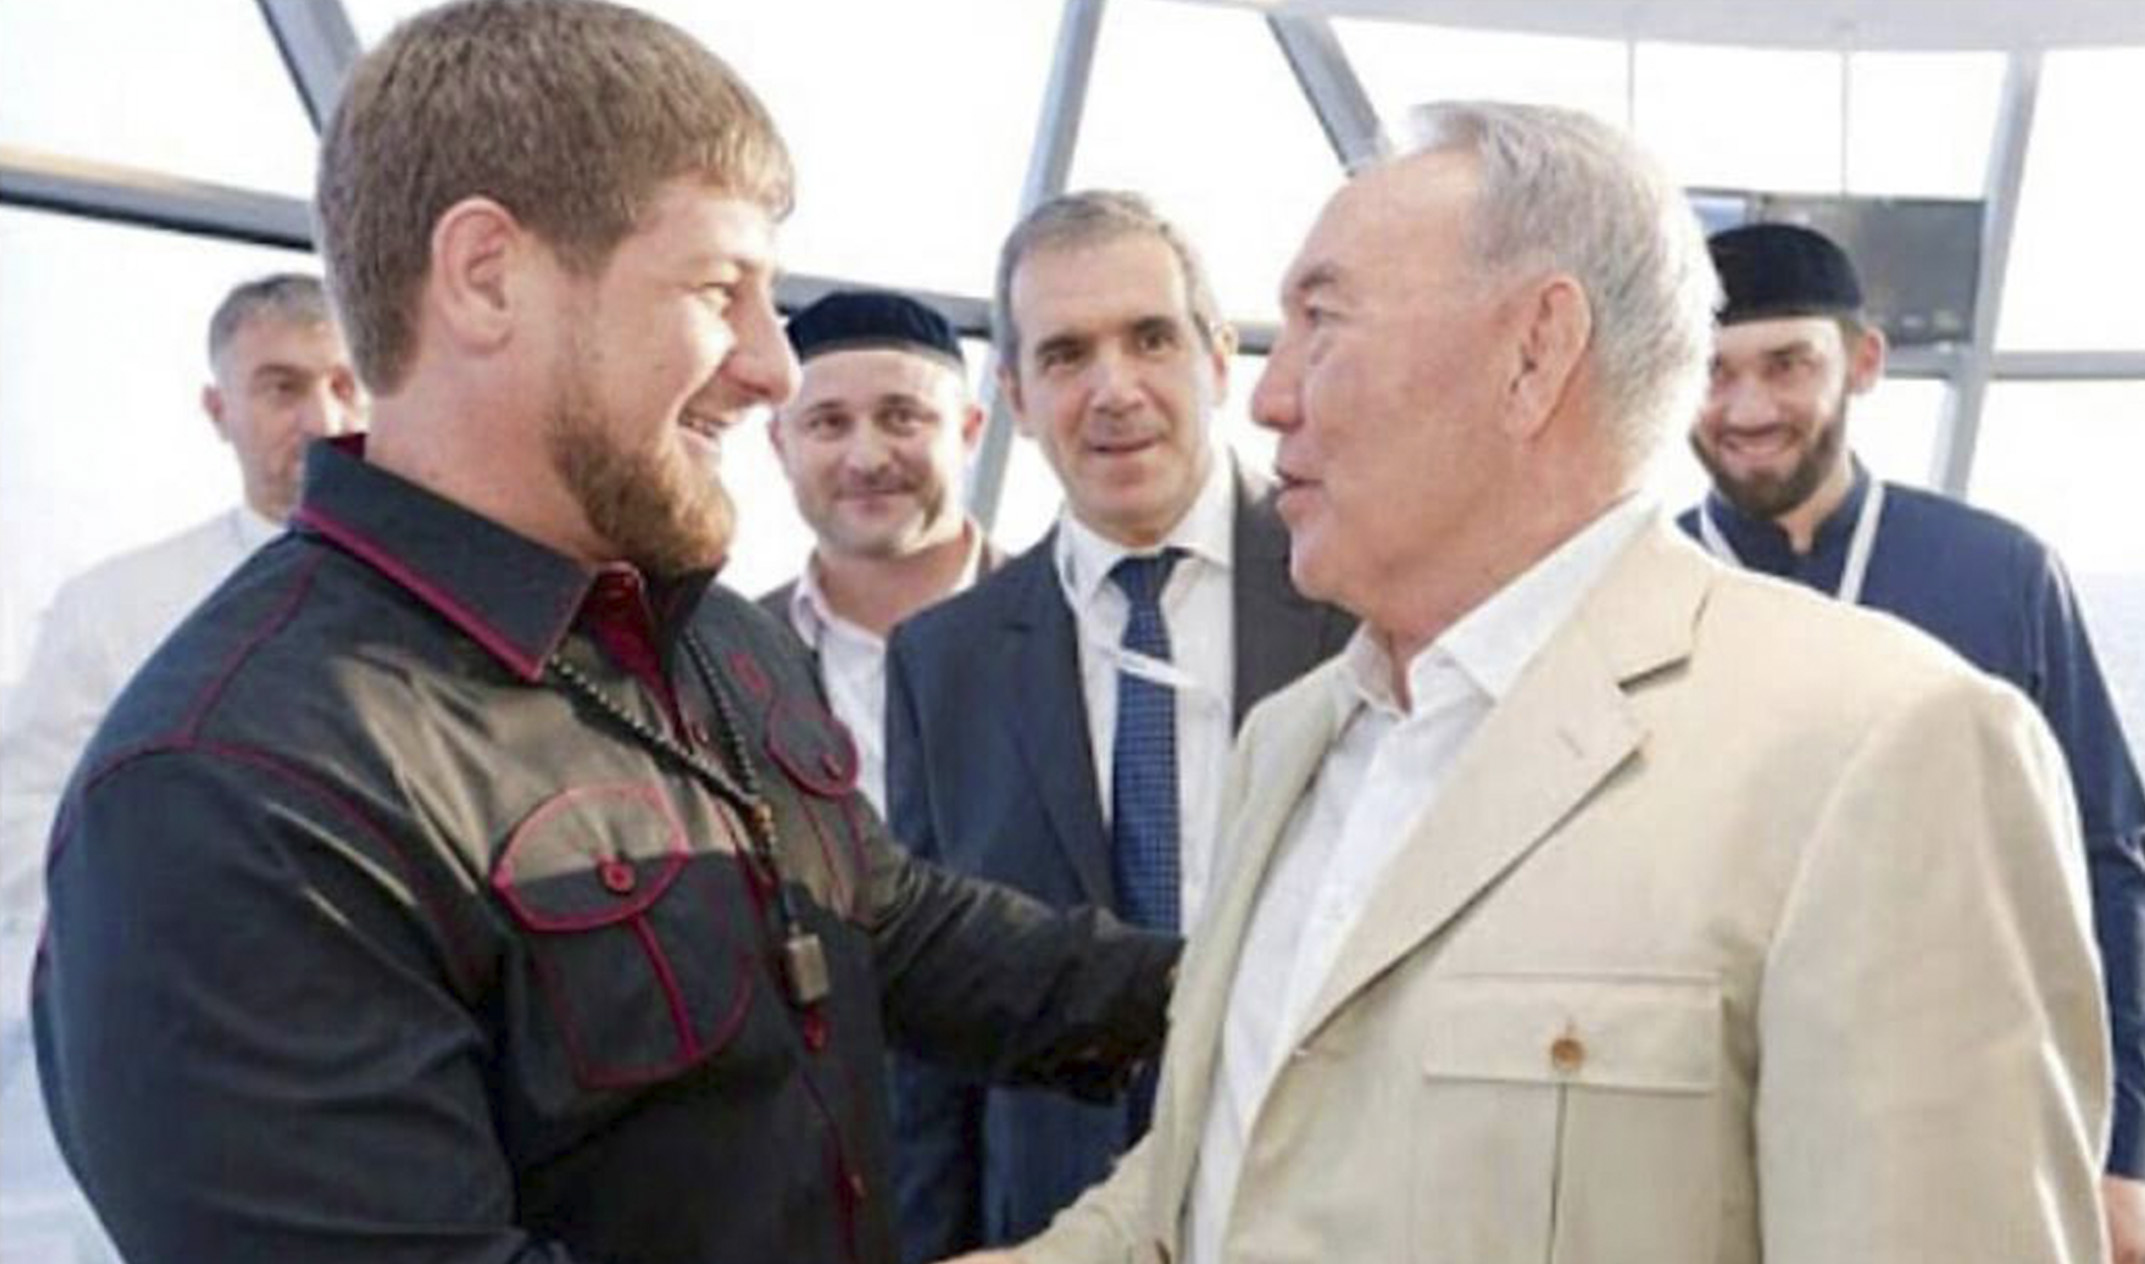 Рамзан Кадыров поздравил народ Казахстана с Днем столицы - Астаны